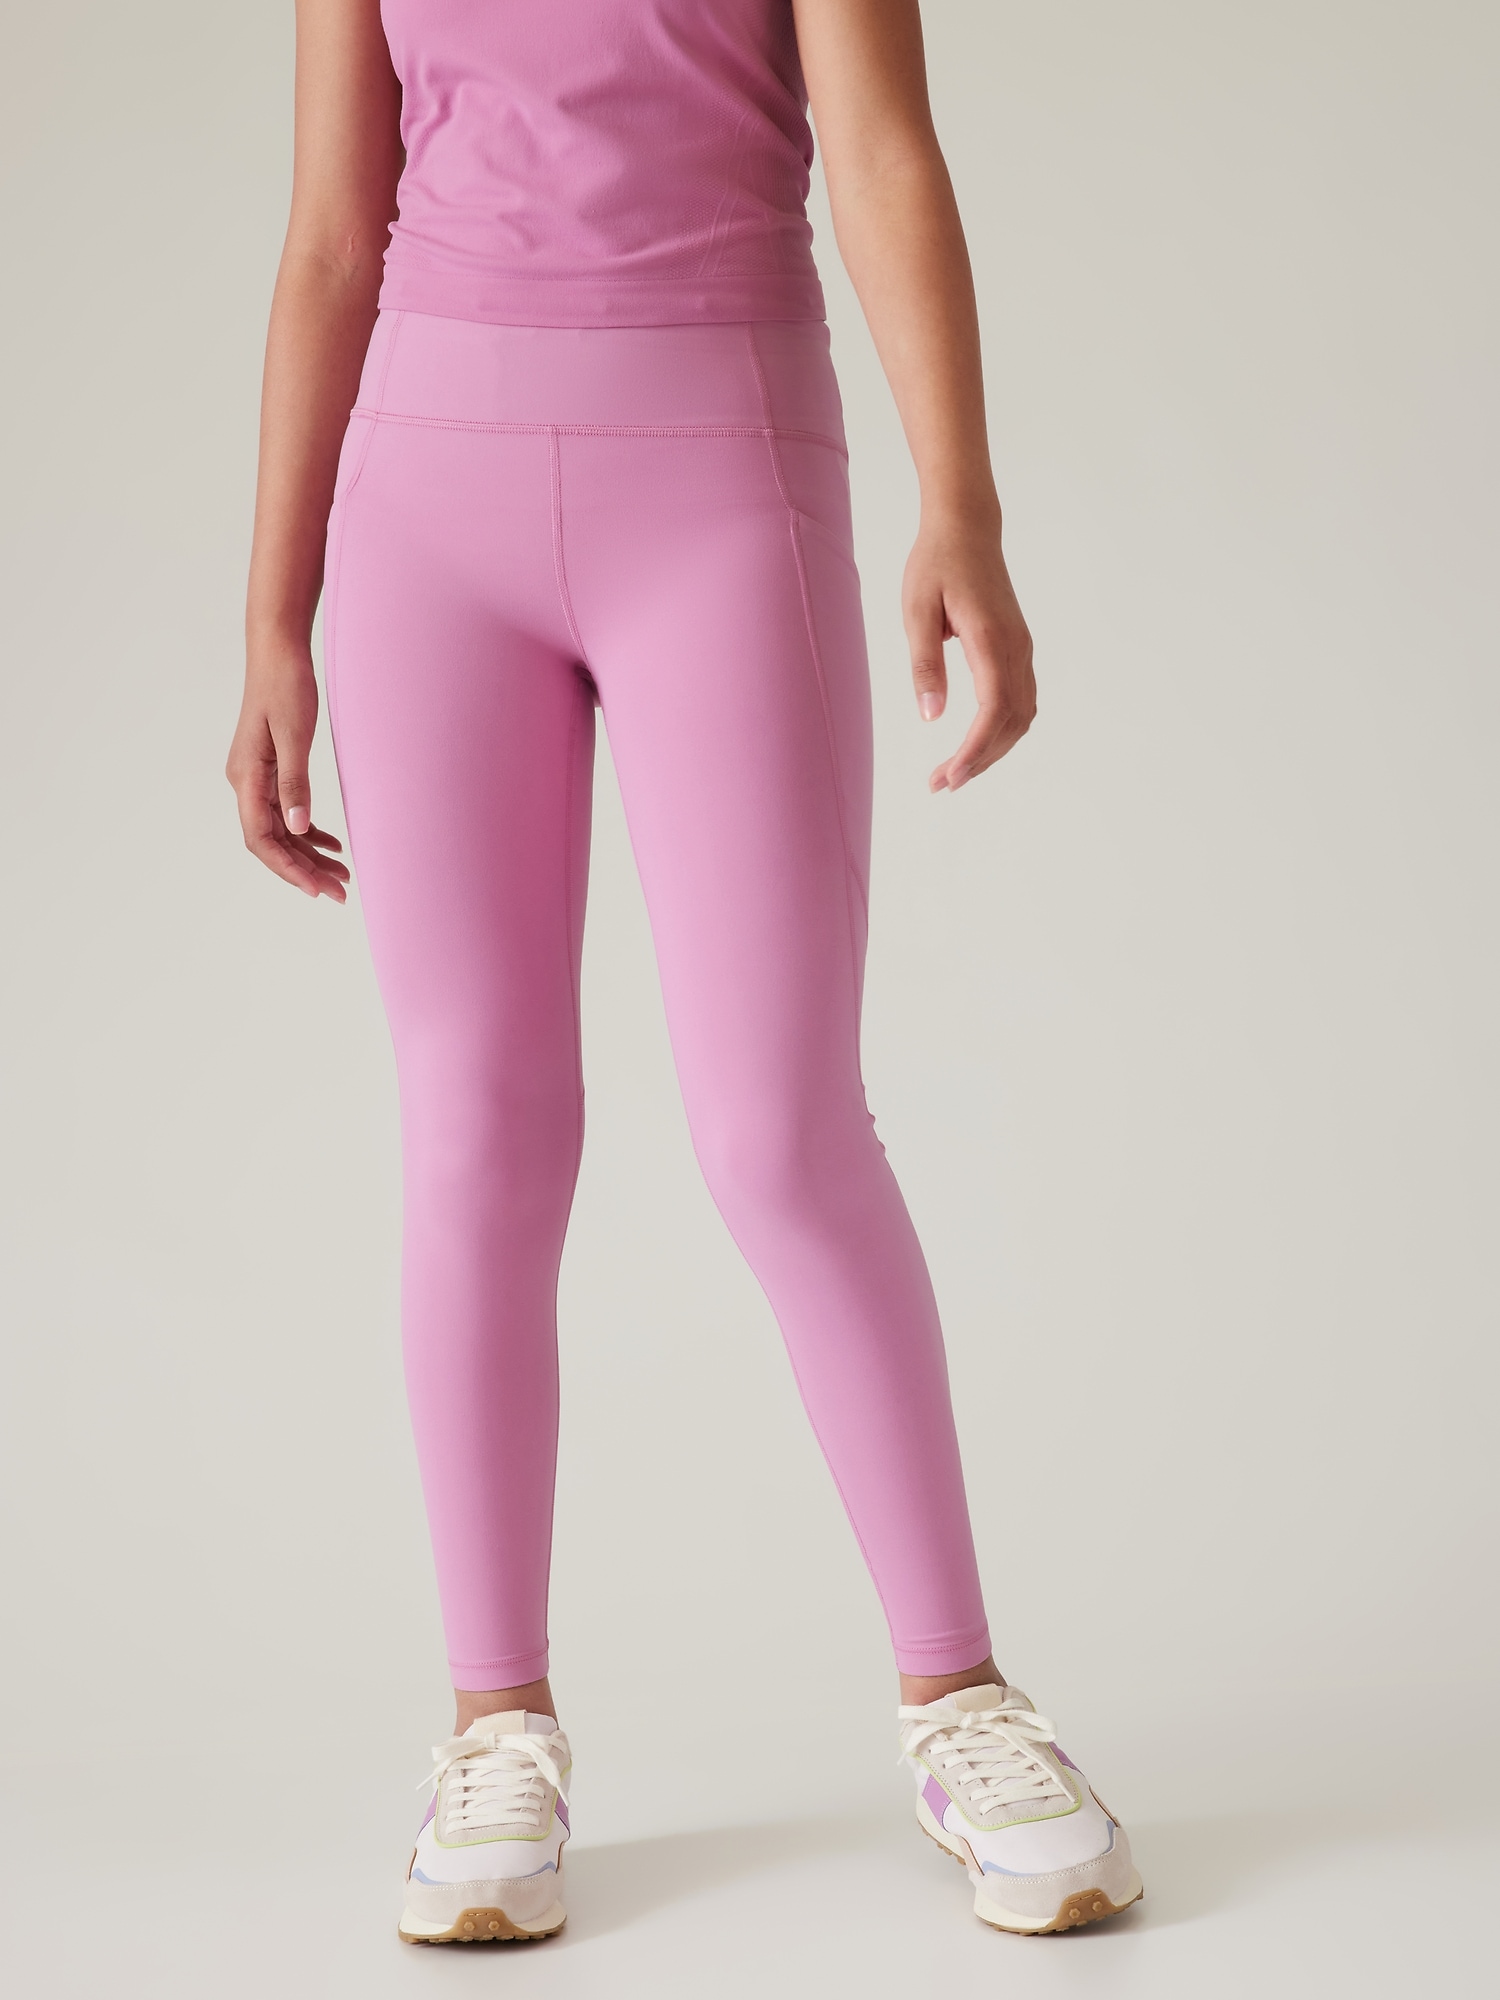 Athleta Solid Pink Leggings Size XL - 65% off